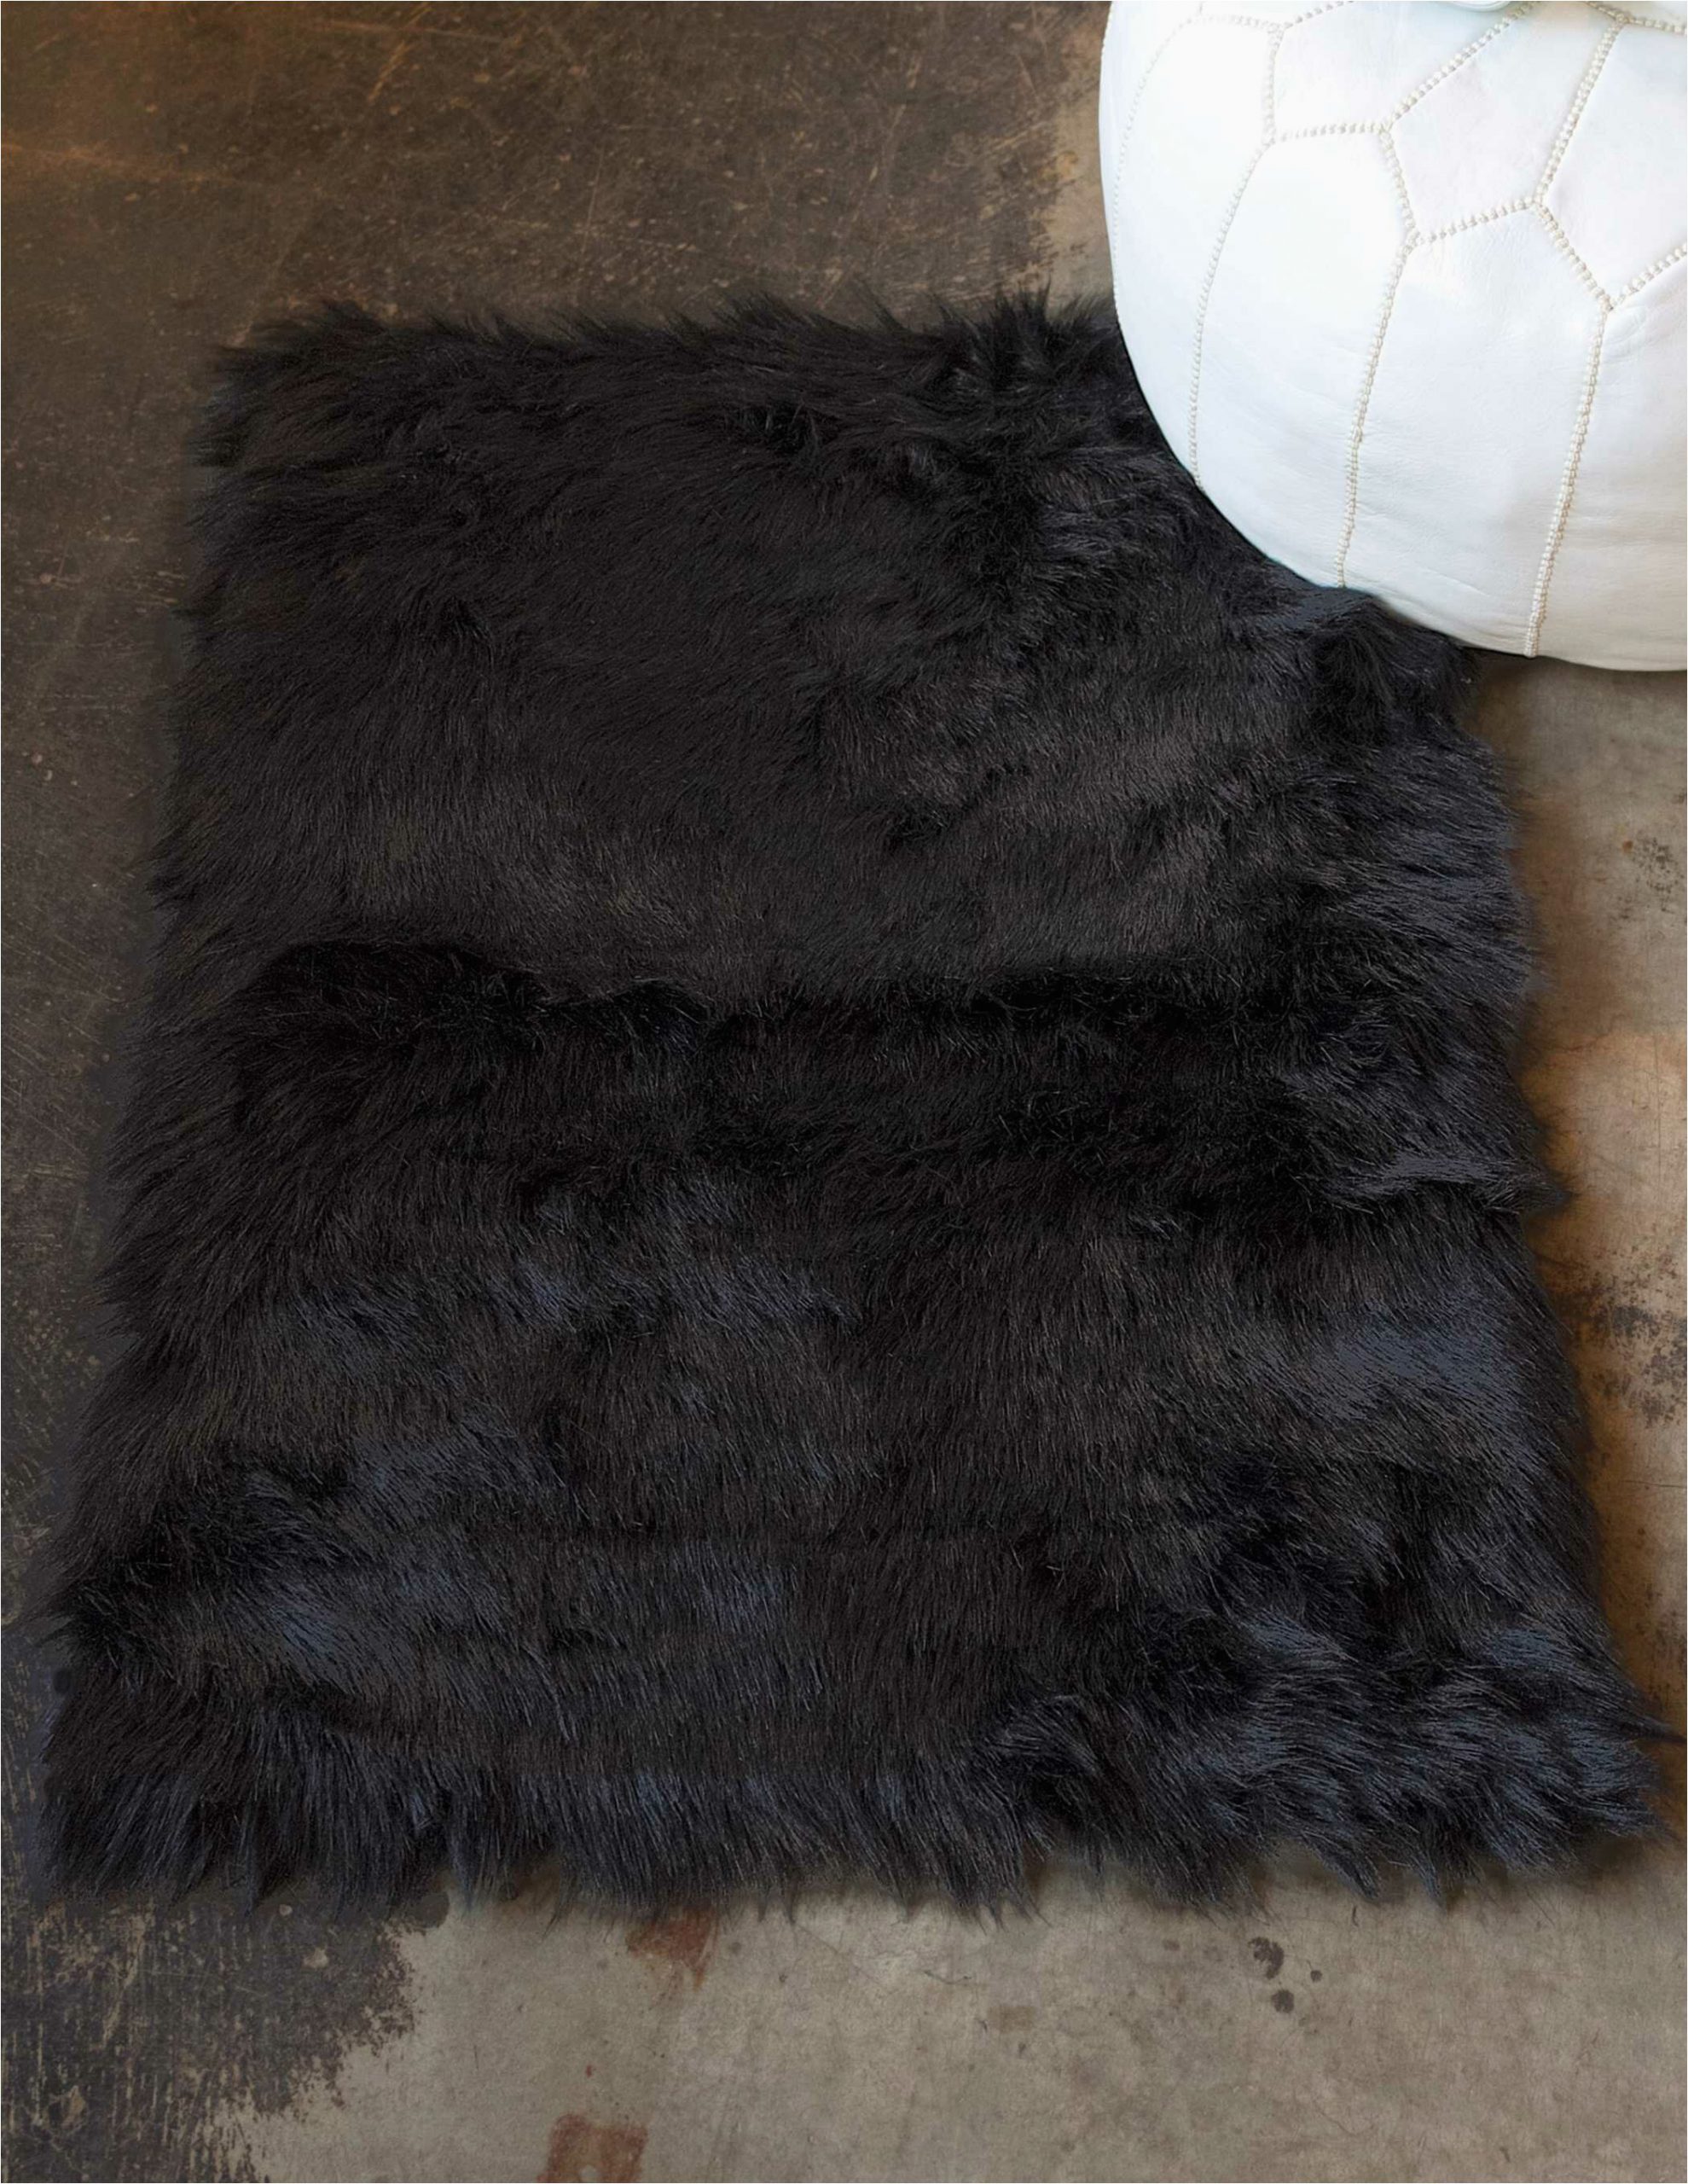 Black Faux Fur area Rug Willems Handmade Shag Sheepskin Black area Rug